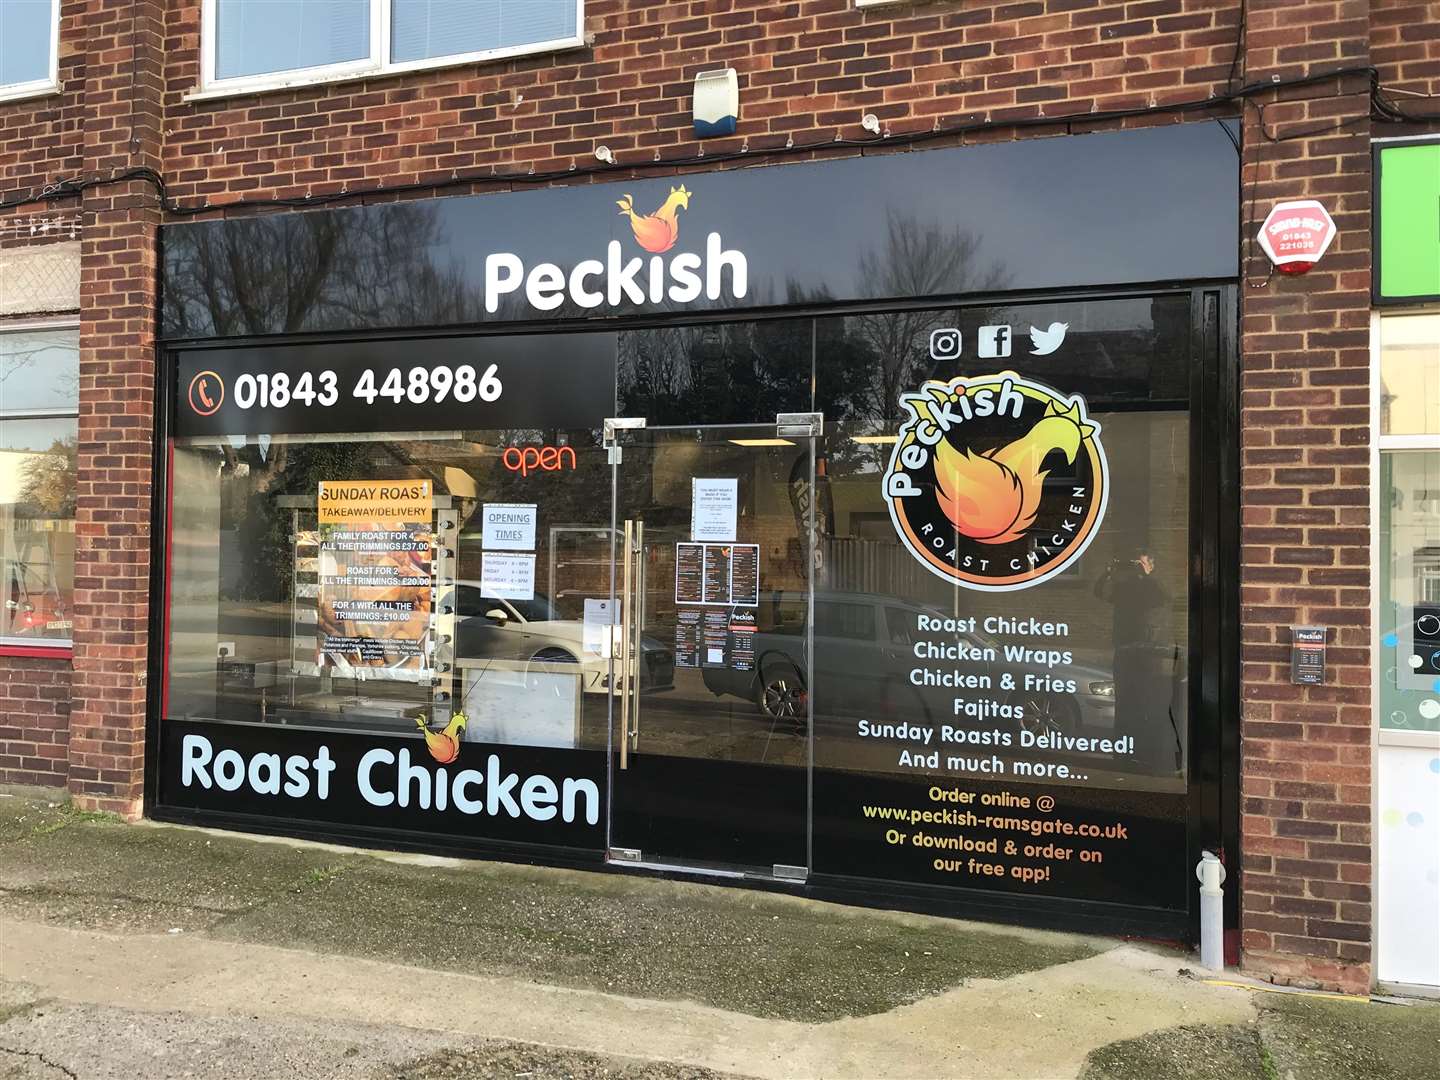 Peckish has opened in Ramsgate